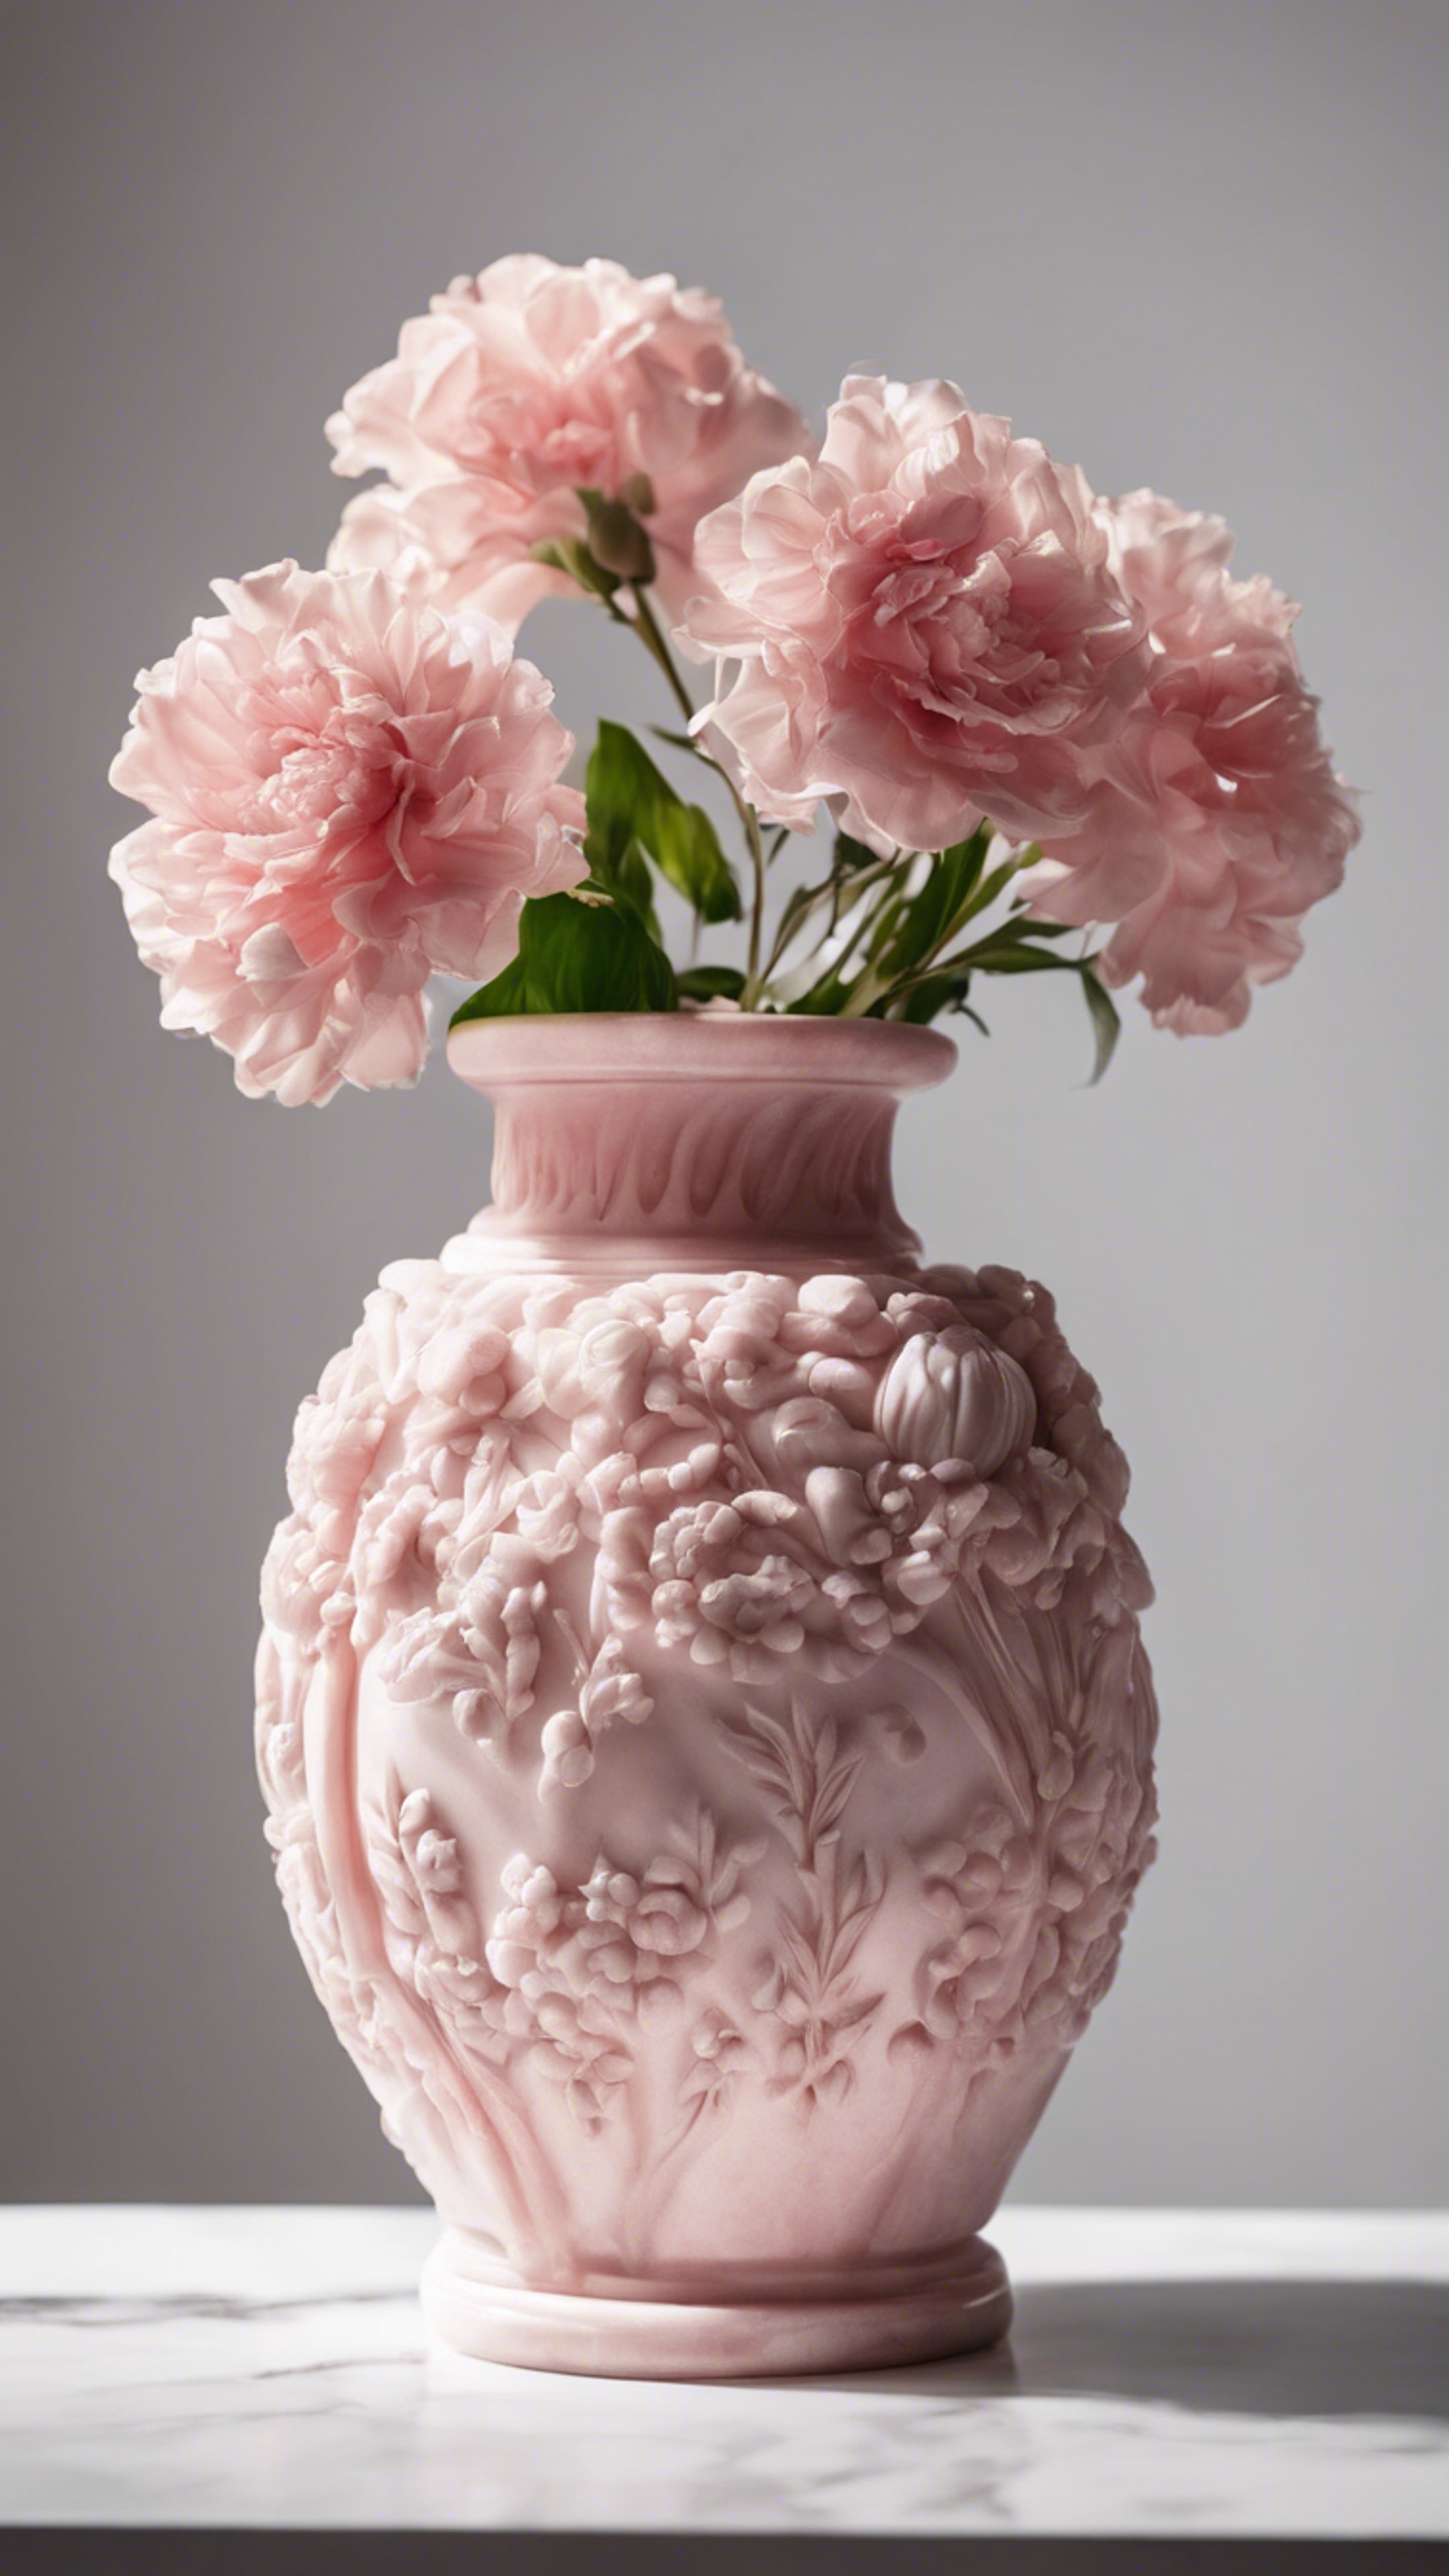 Elegantly carved pink marble flower vase against a white background. Tapet[b14a0bd2340d44aeb9d9]